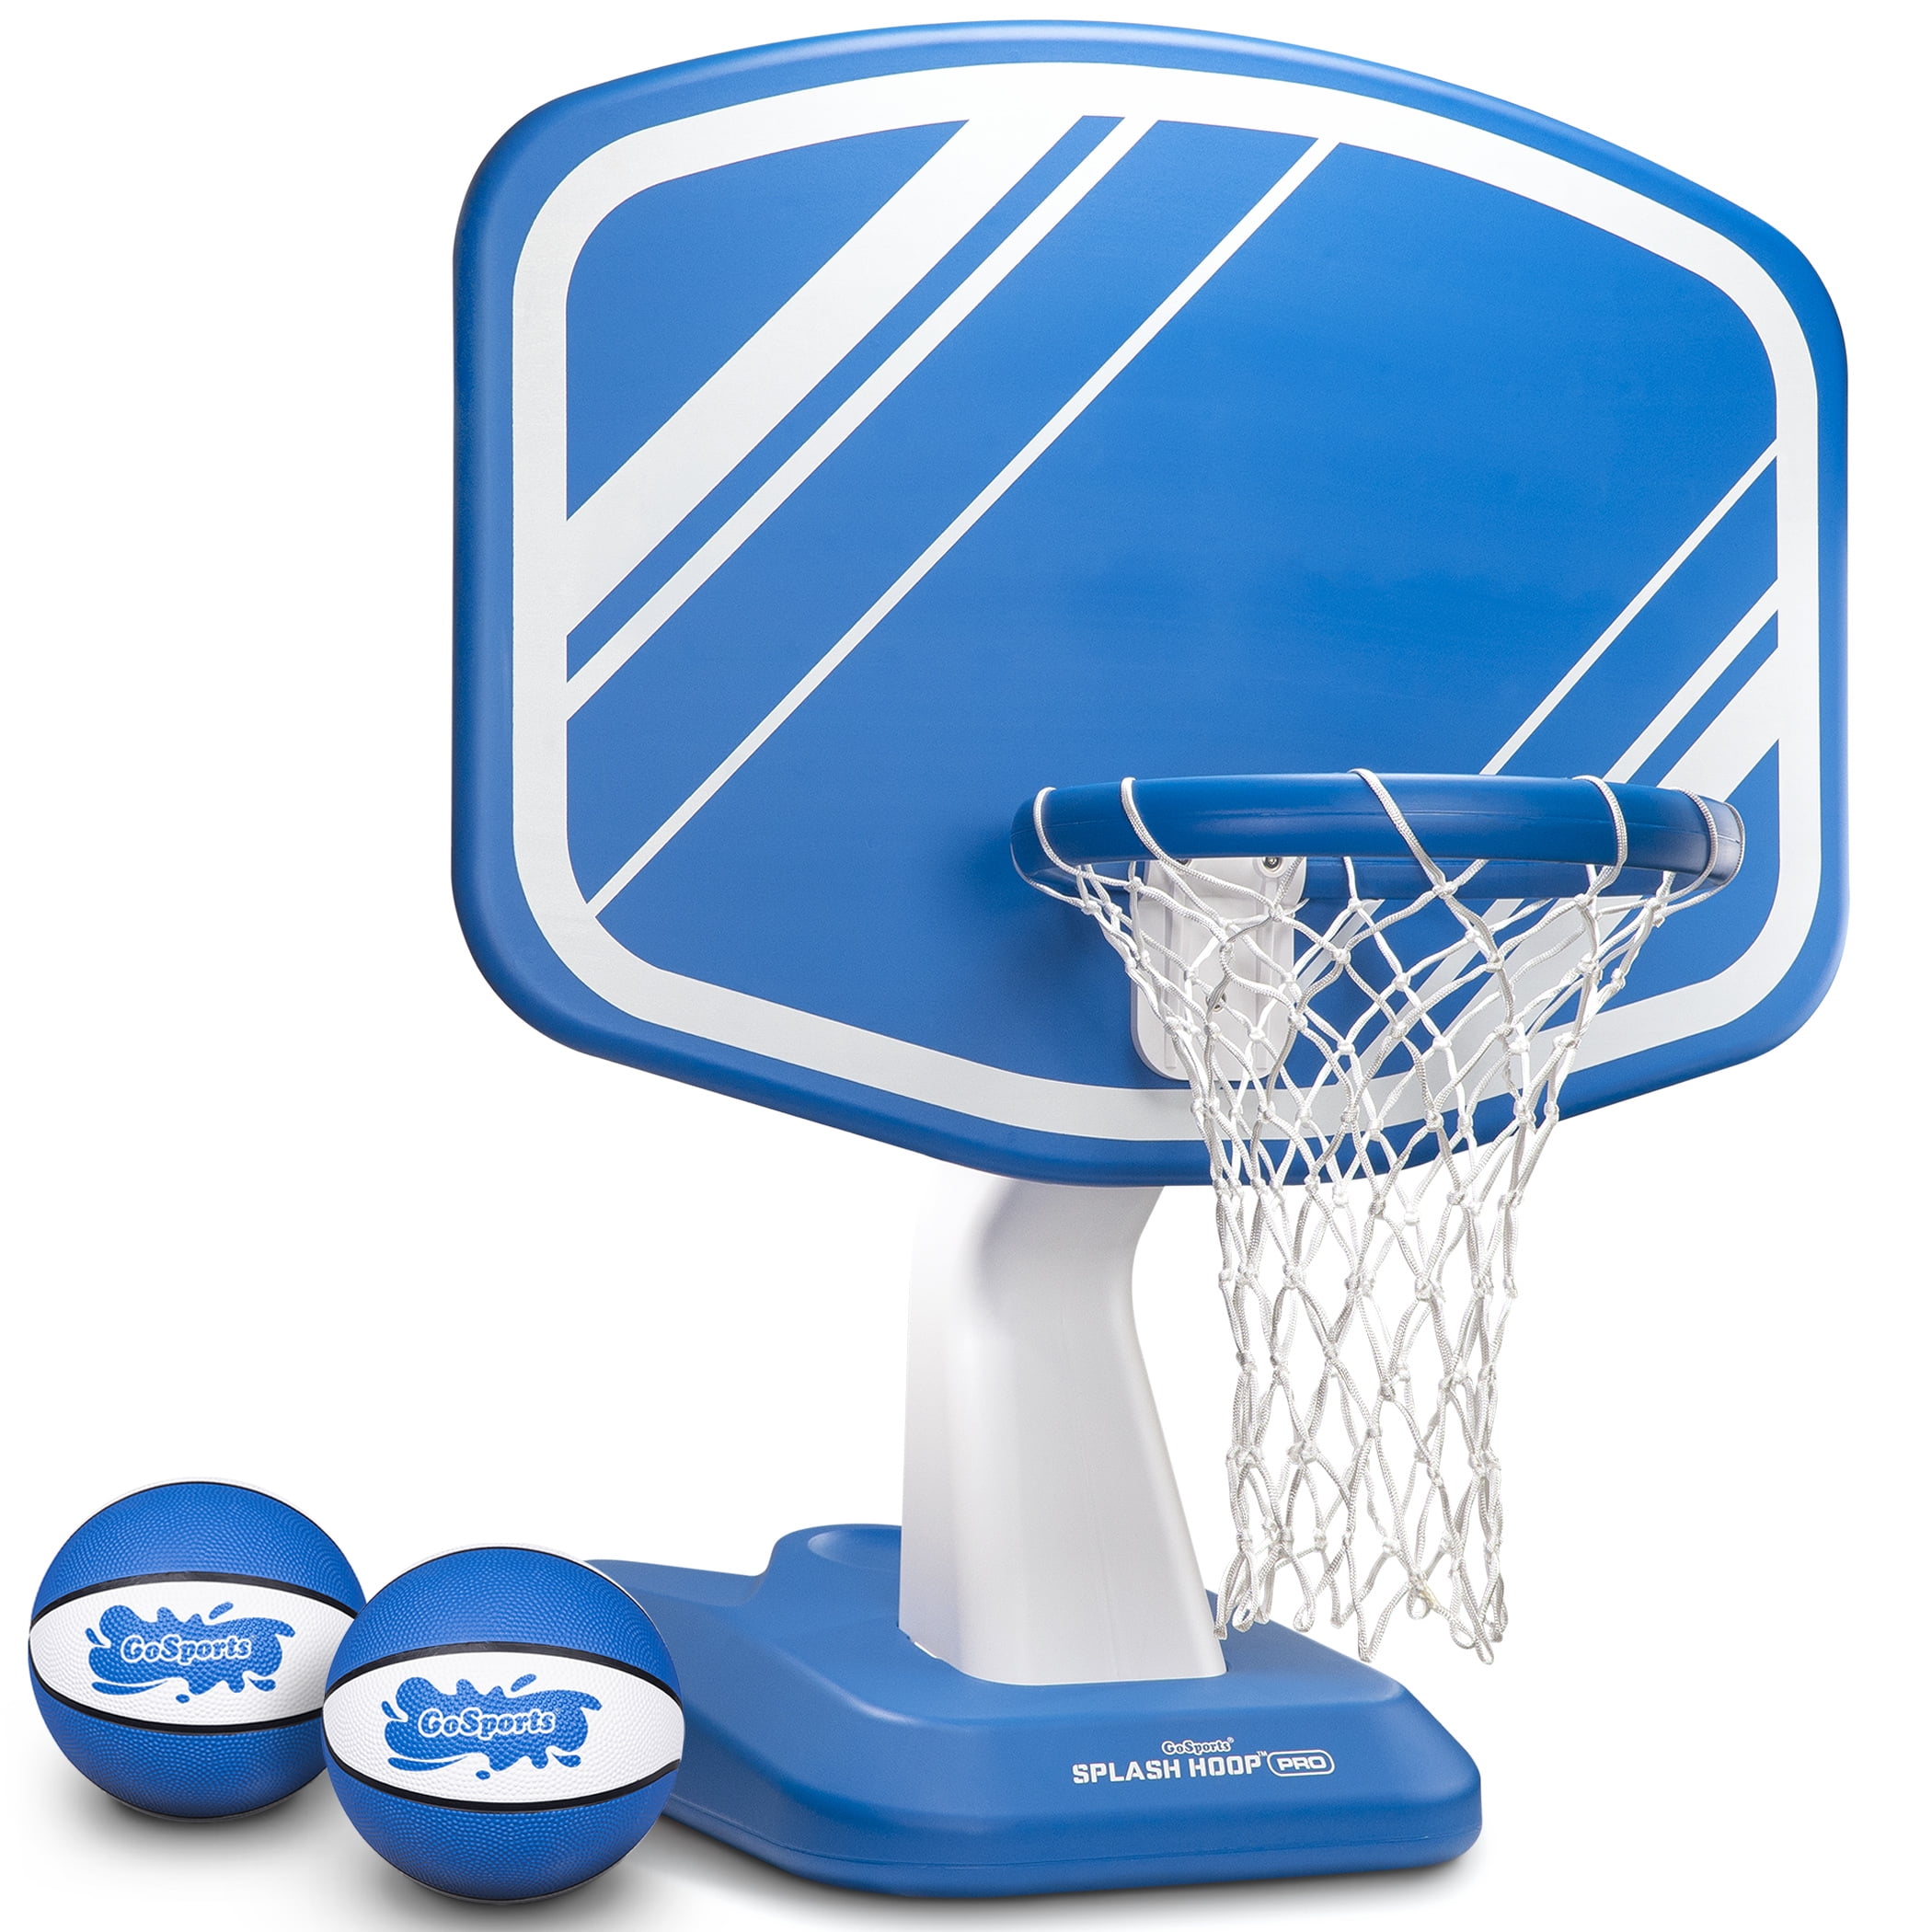 2 Balls and Pump GoSports Splash Hoop PRO Swimming Pool Basketball Game Includes Poolside Water Basketball Hoop 